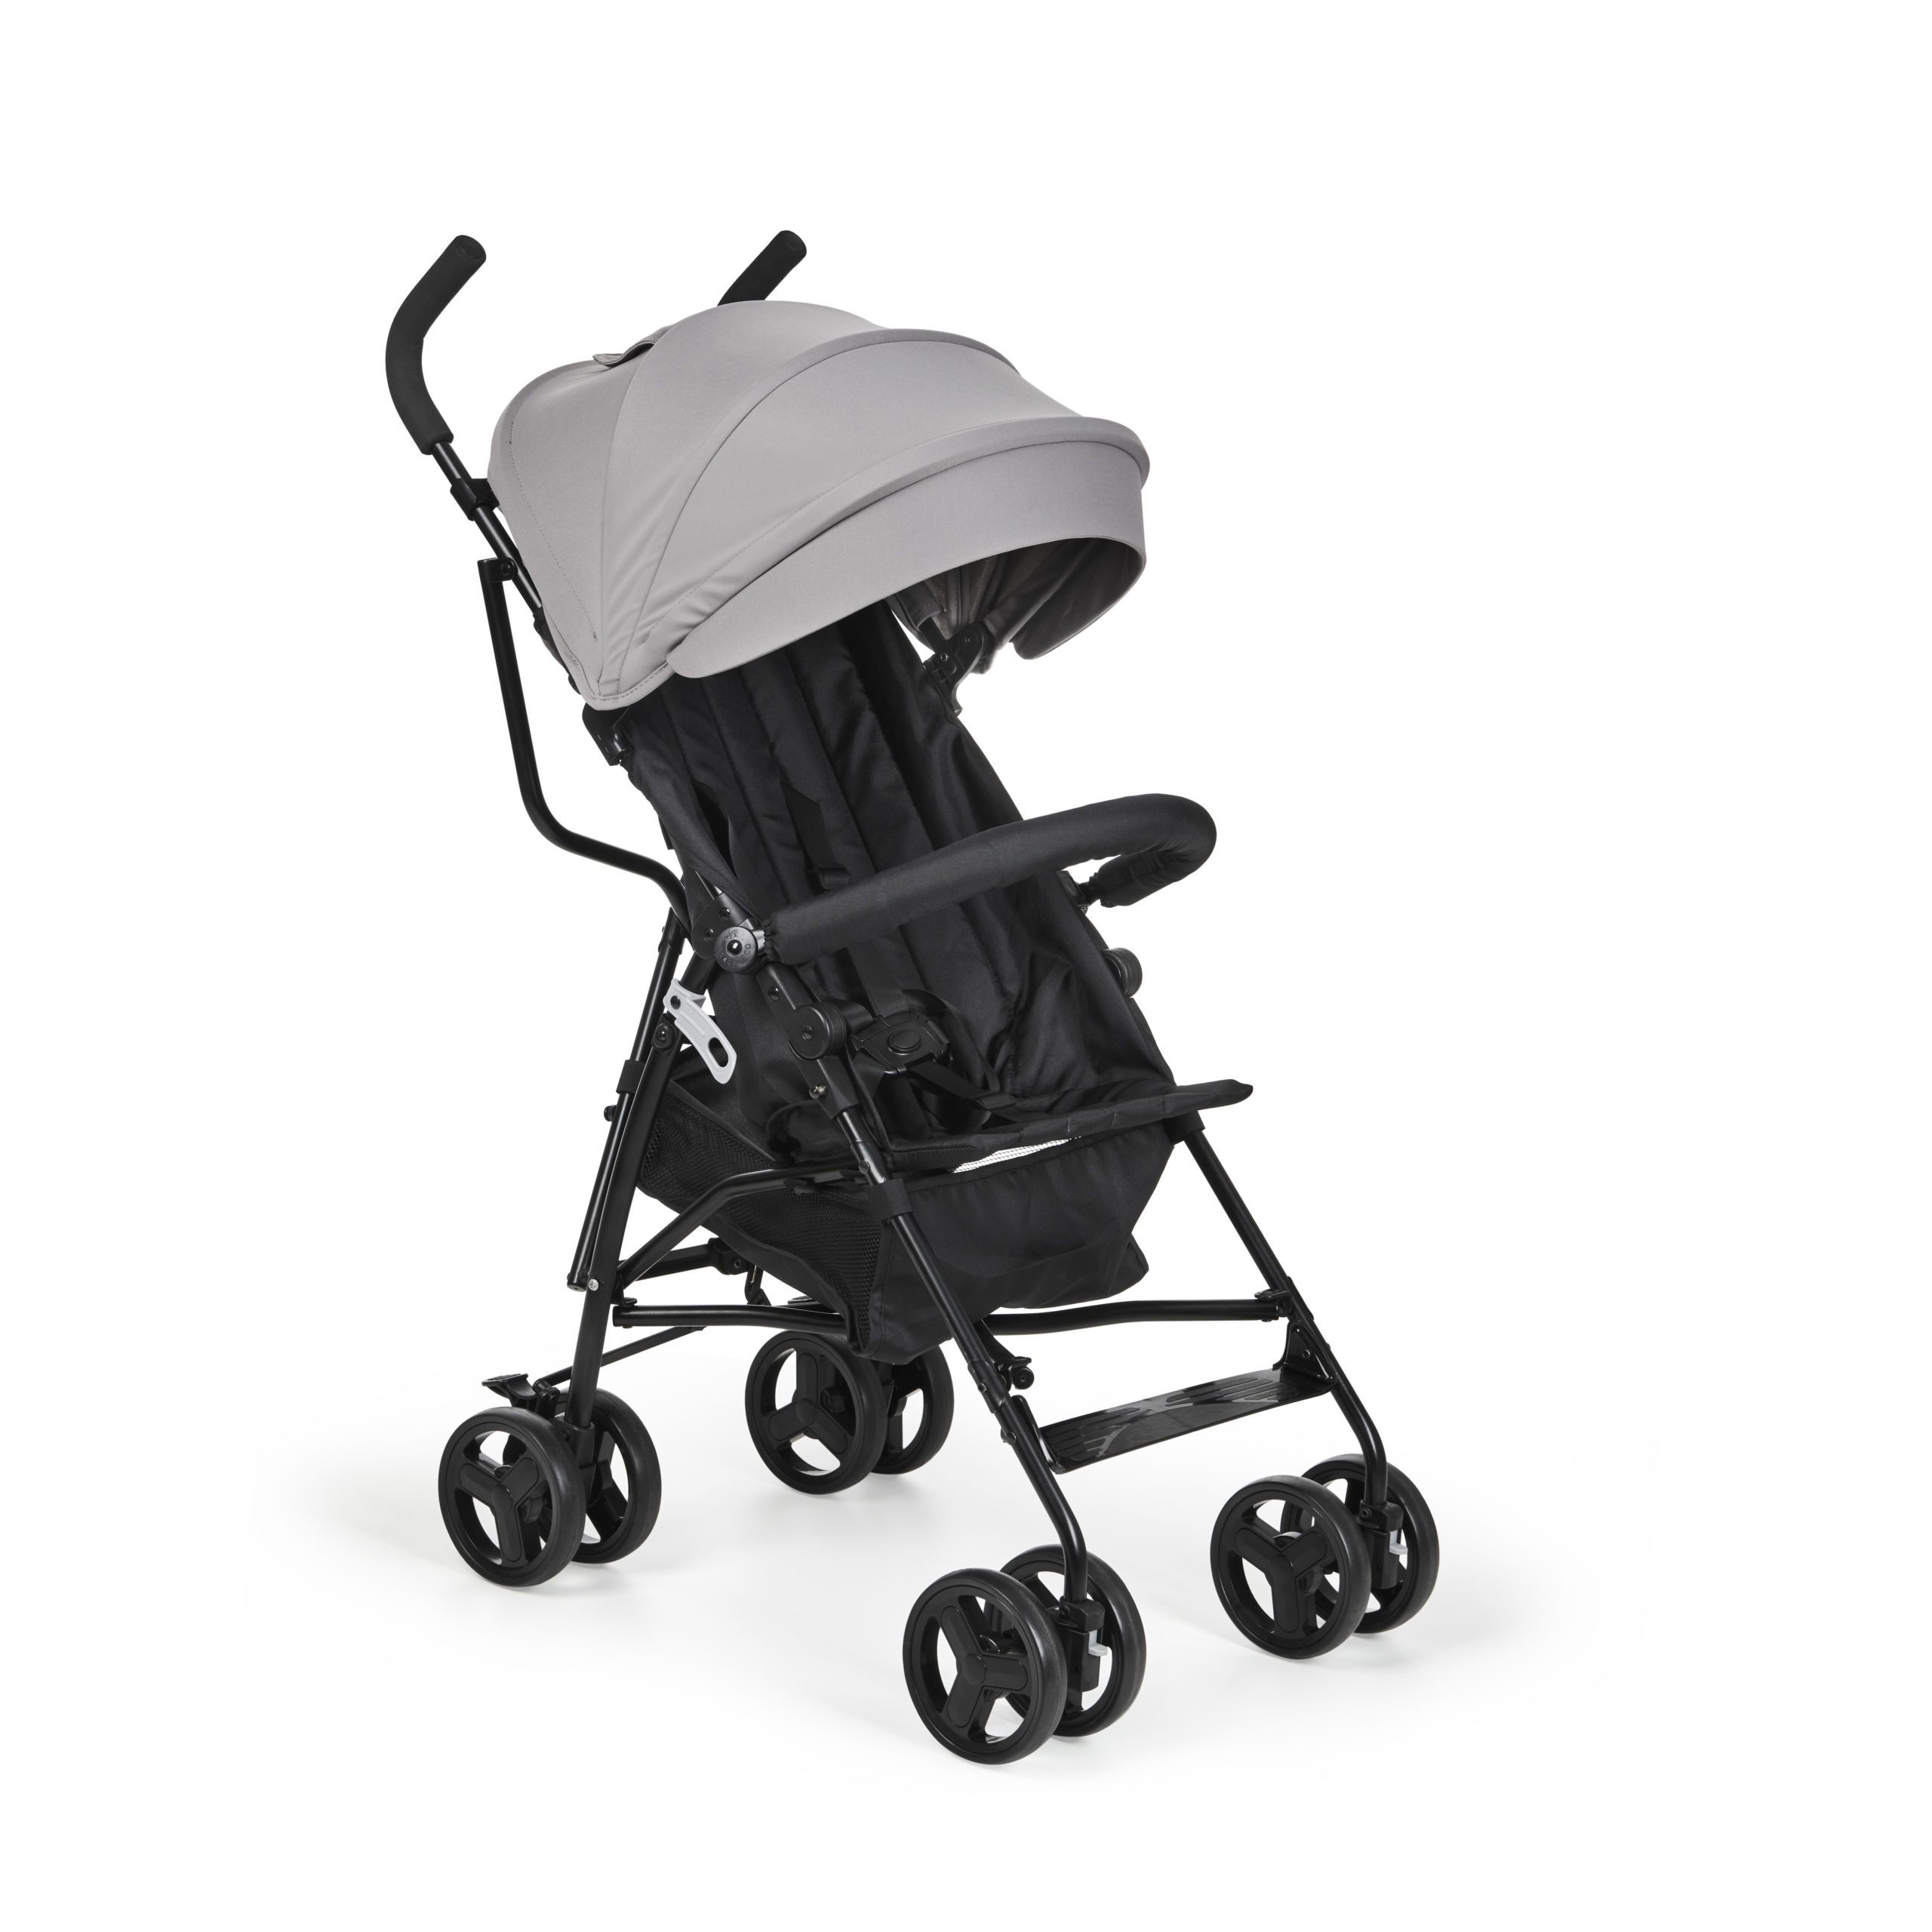 silla sillita paseo bebe niñoa keo negra innovaciones ms carrito ligera  21503 hasta 22 kg facil plegado